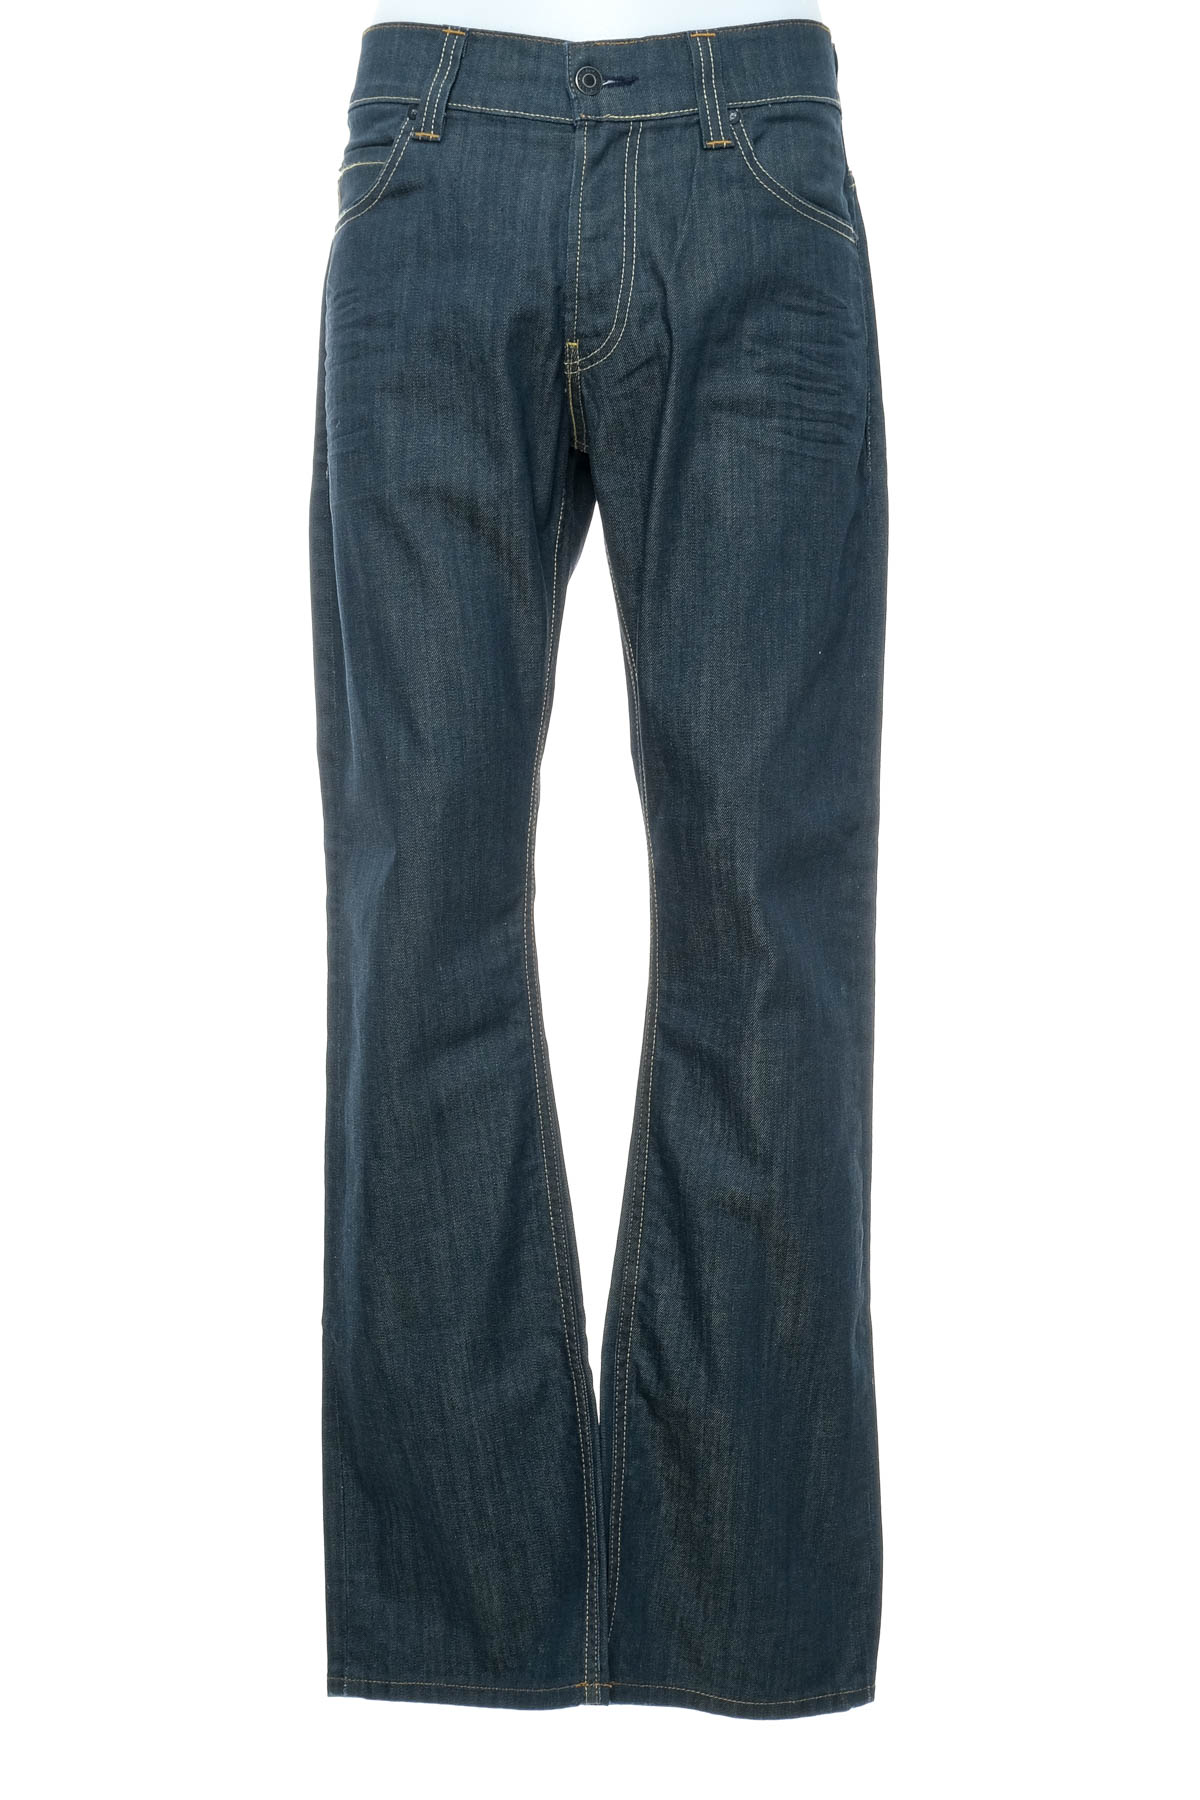 Men's jeans - Levi Strauss & Co - 0